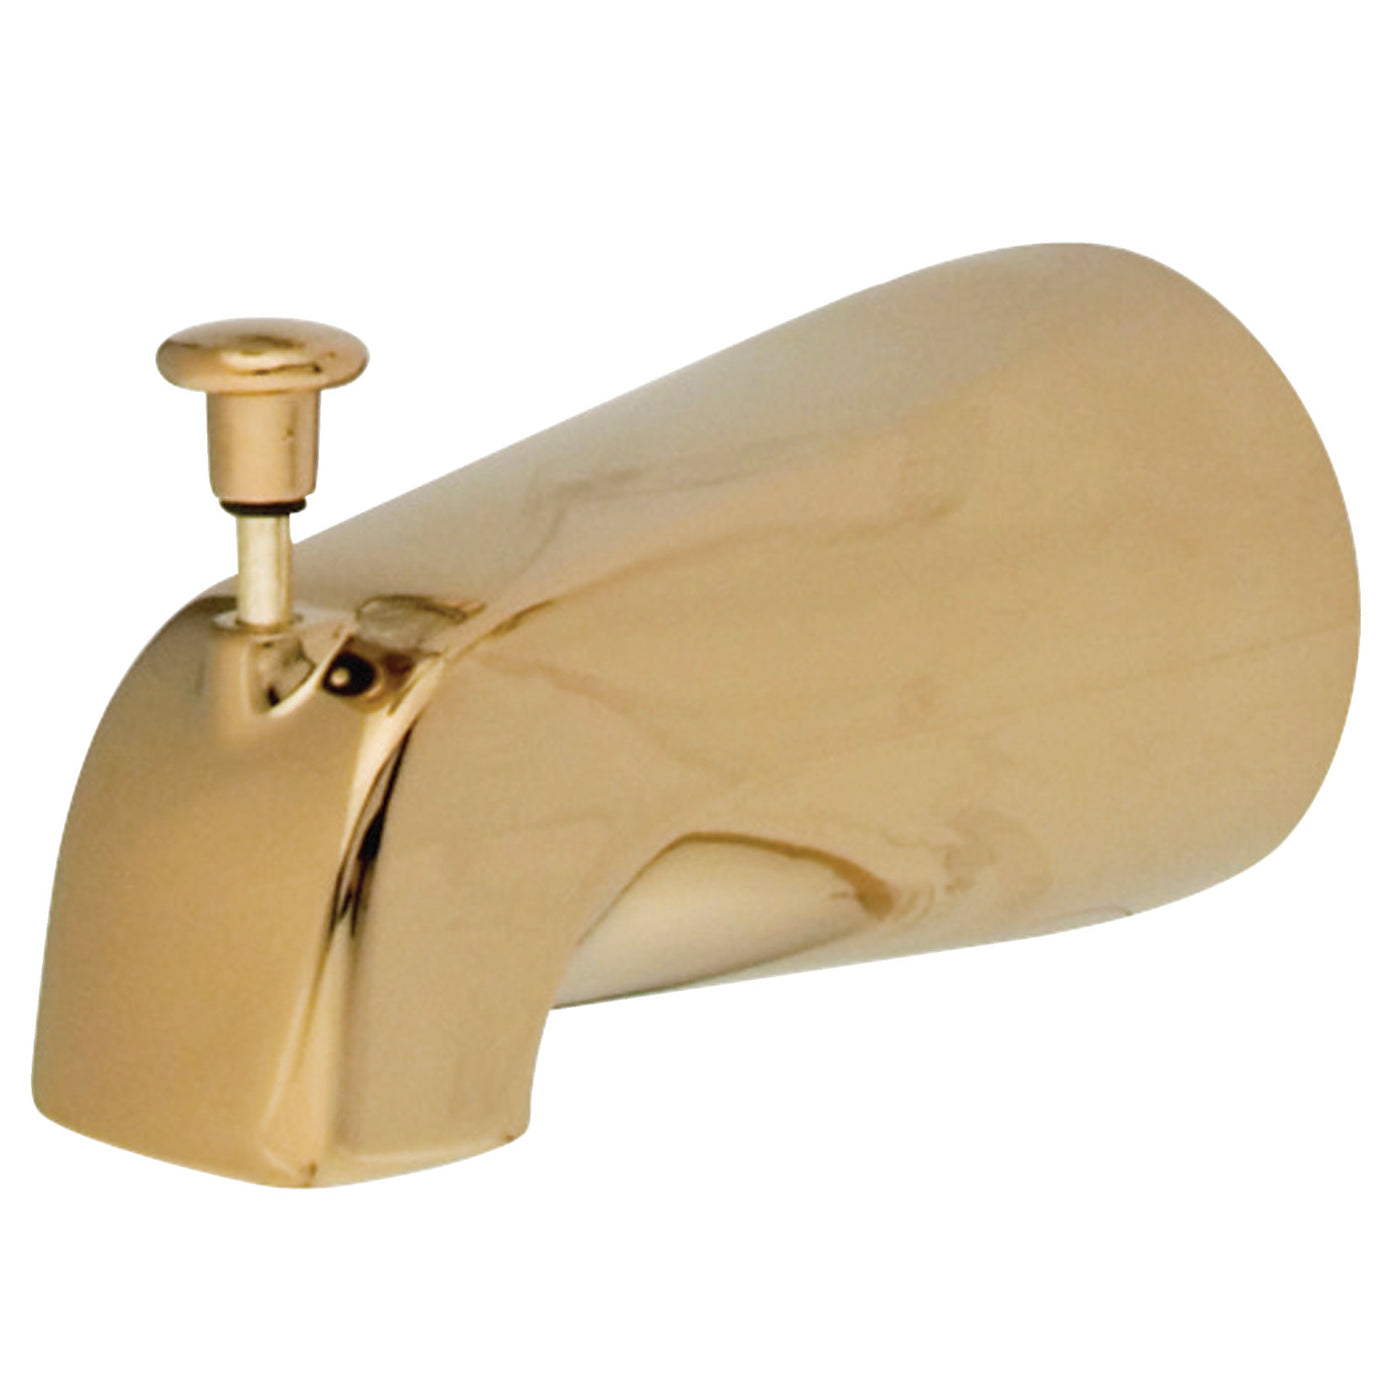 Elements of Design DK189A2 5-1/4 Inch Zinc Tub Spout with Diverter, Polished Brass